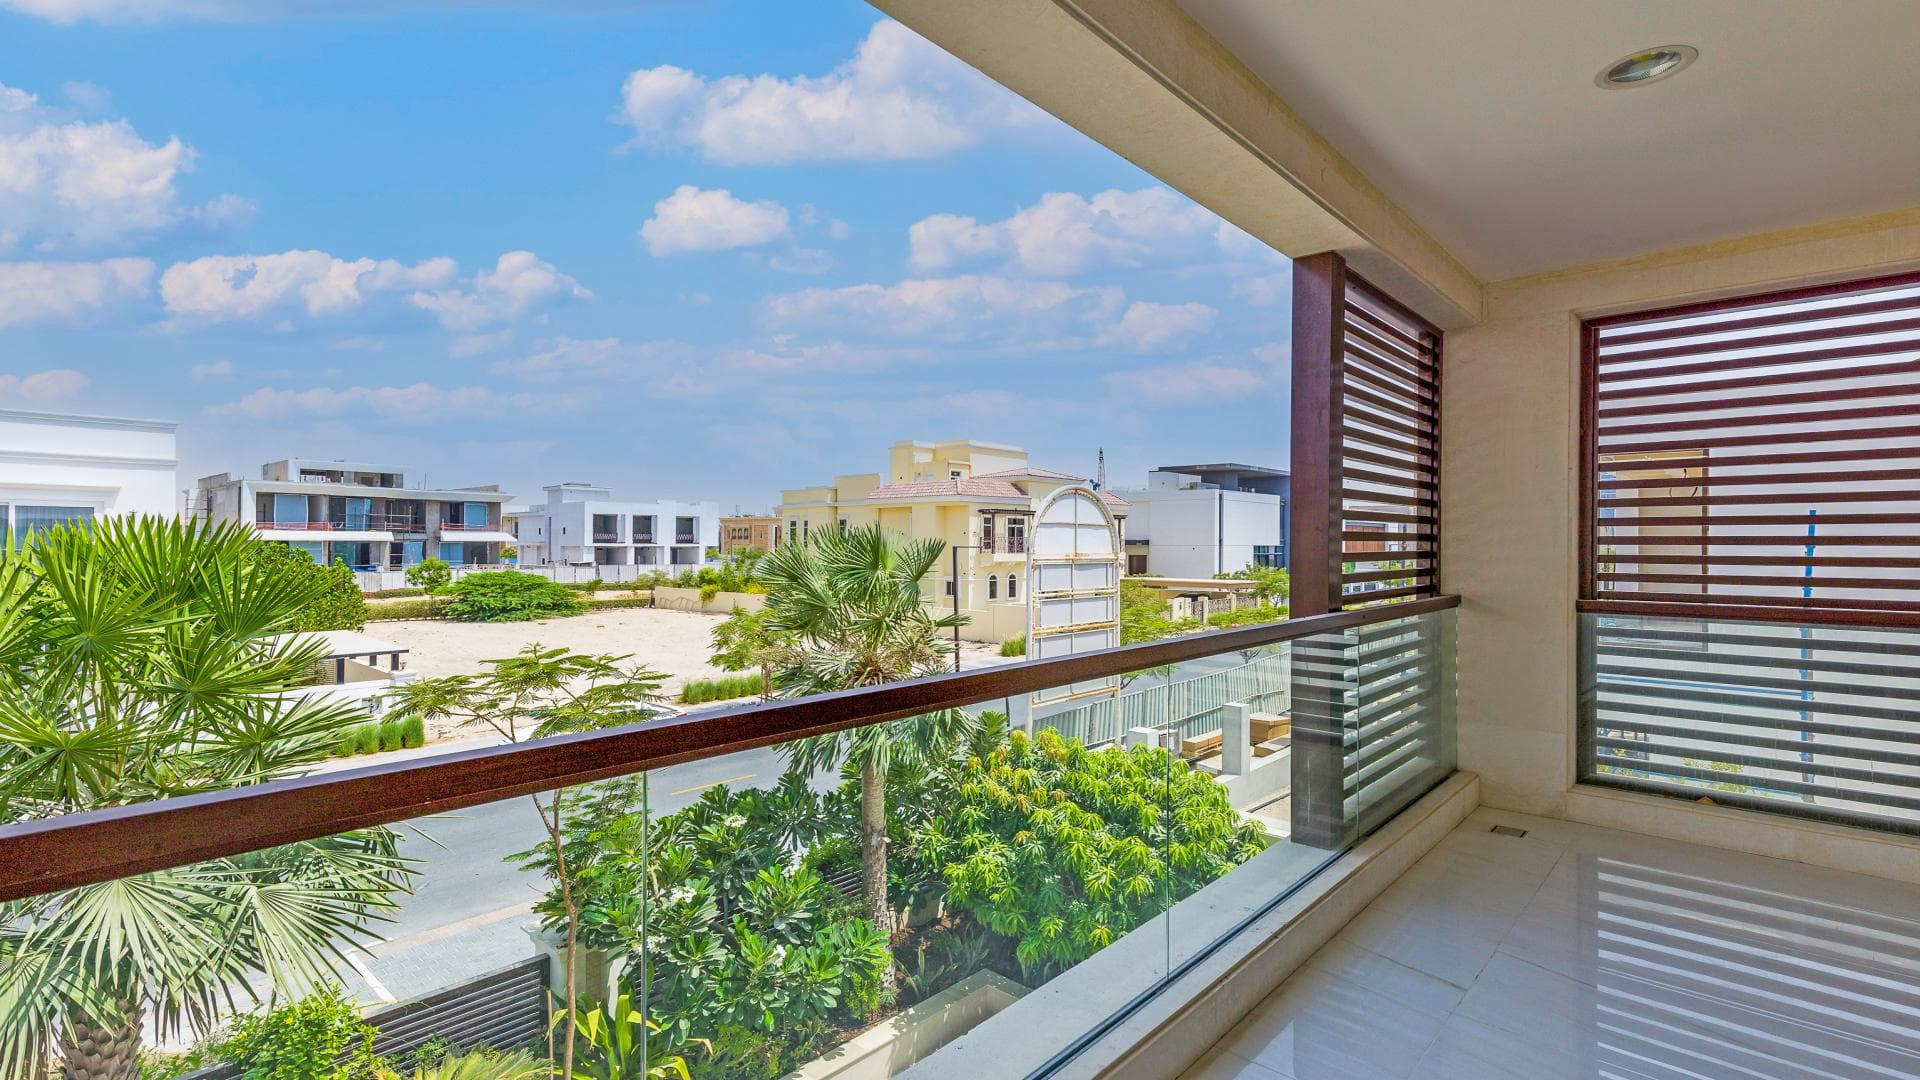 6 Bedroom Villa For Sale Dubai Hills Lp19372 2310c7049b92d200.jpg